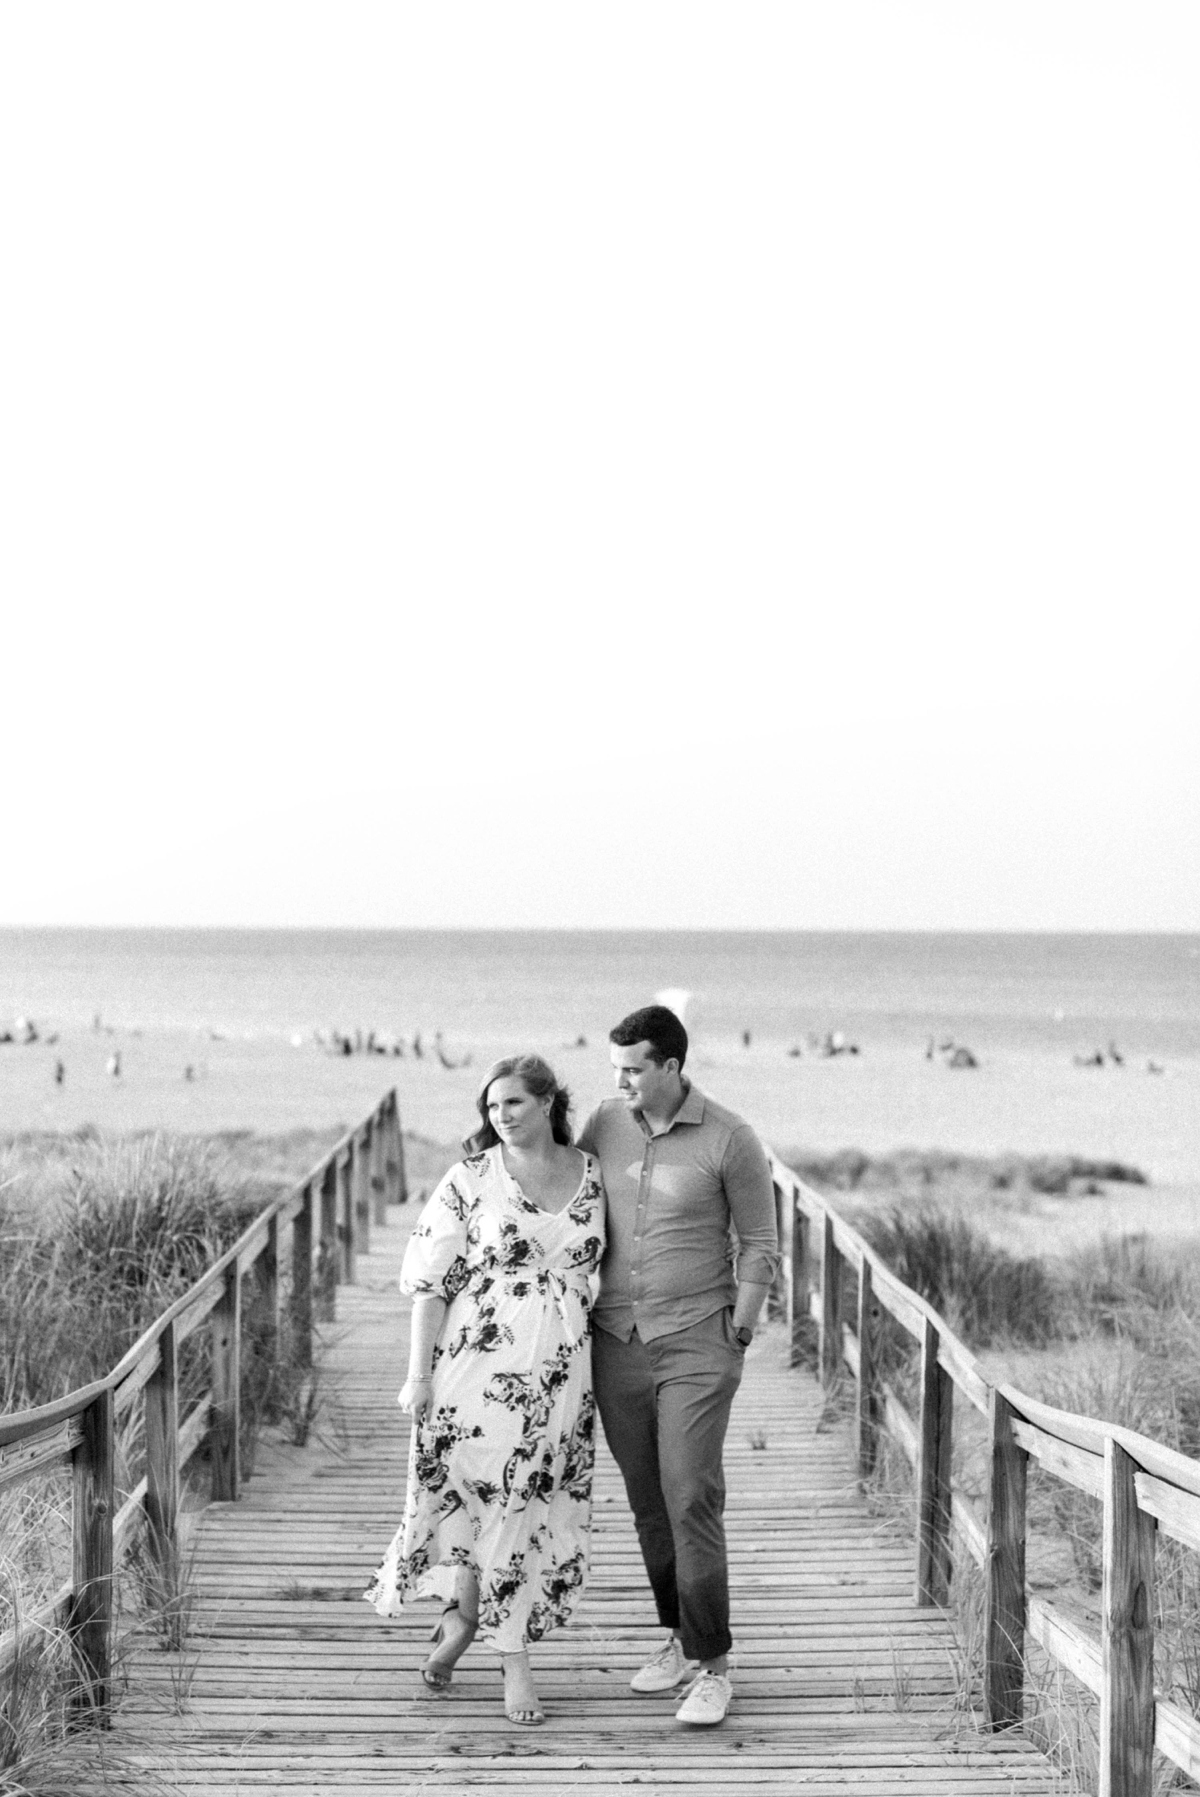 Crane Beach Engagement Session shot by Boston Wedding Photographer Annmarie Swift